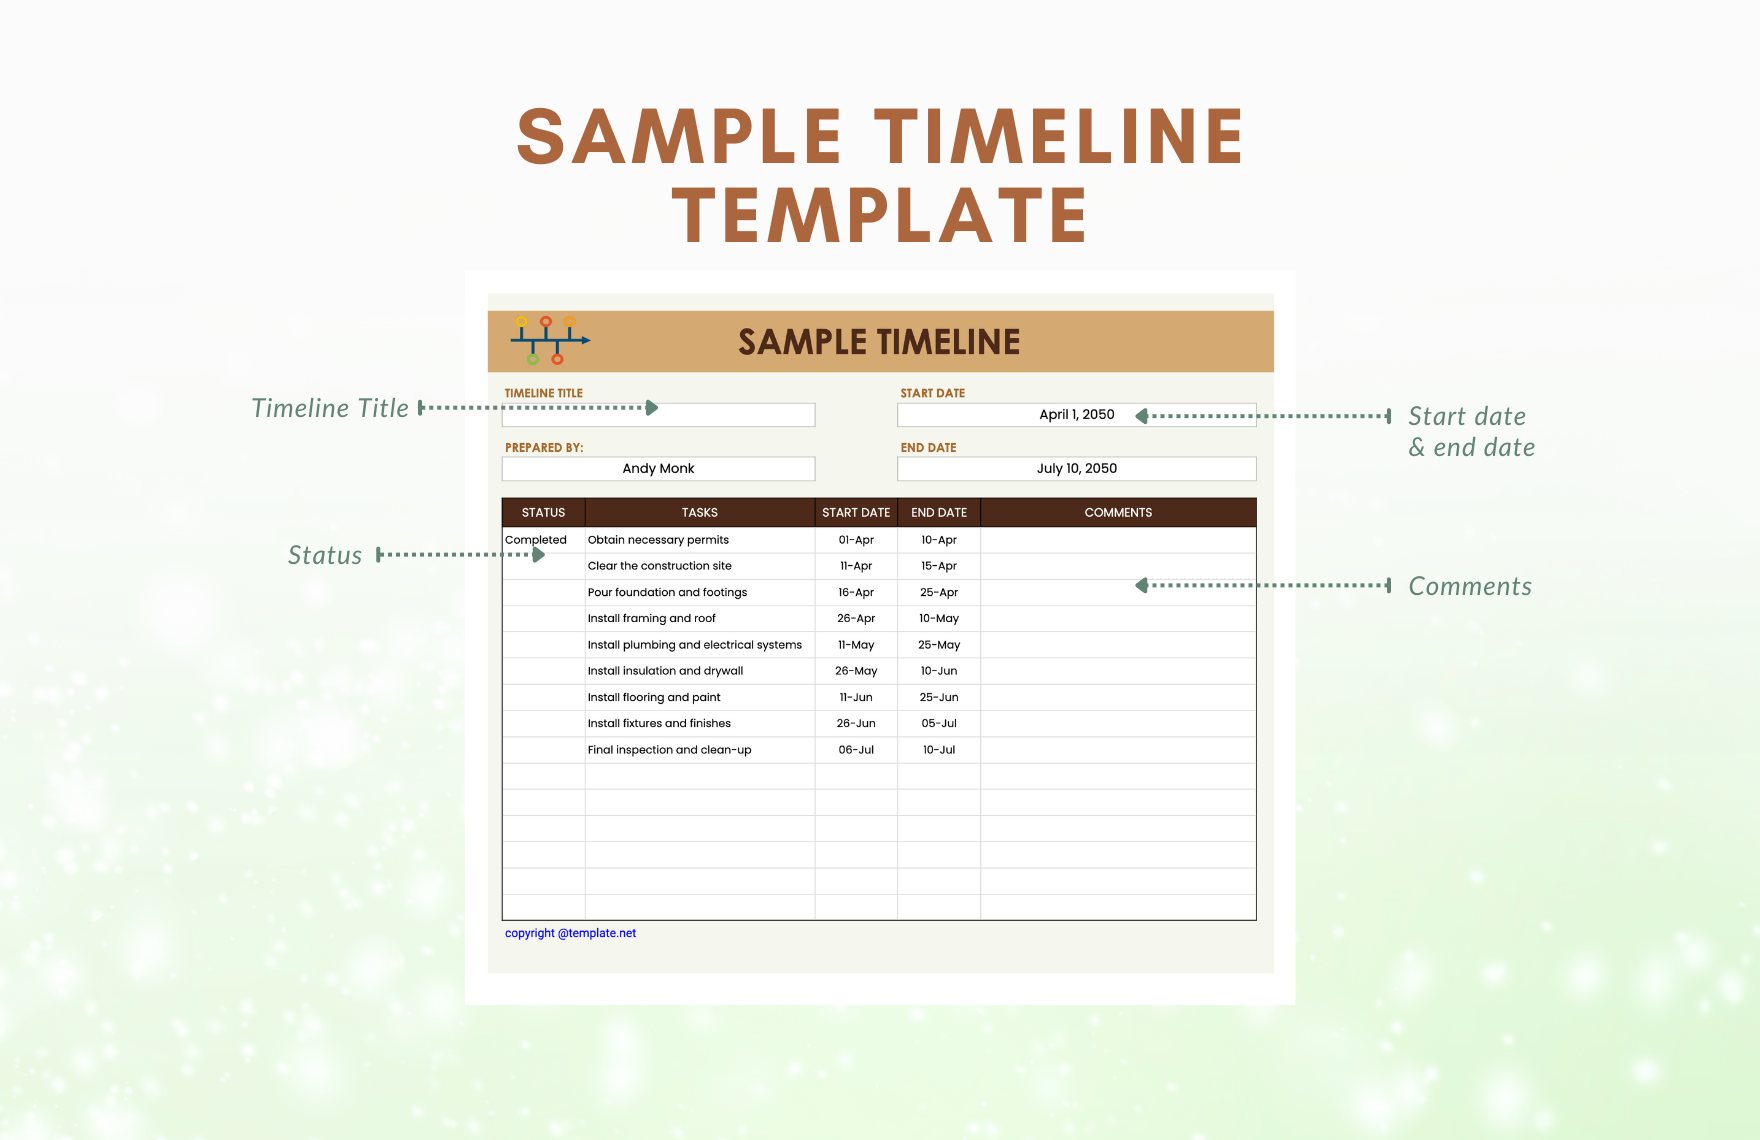 Sample Timeline Template